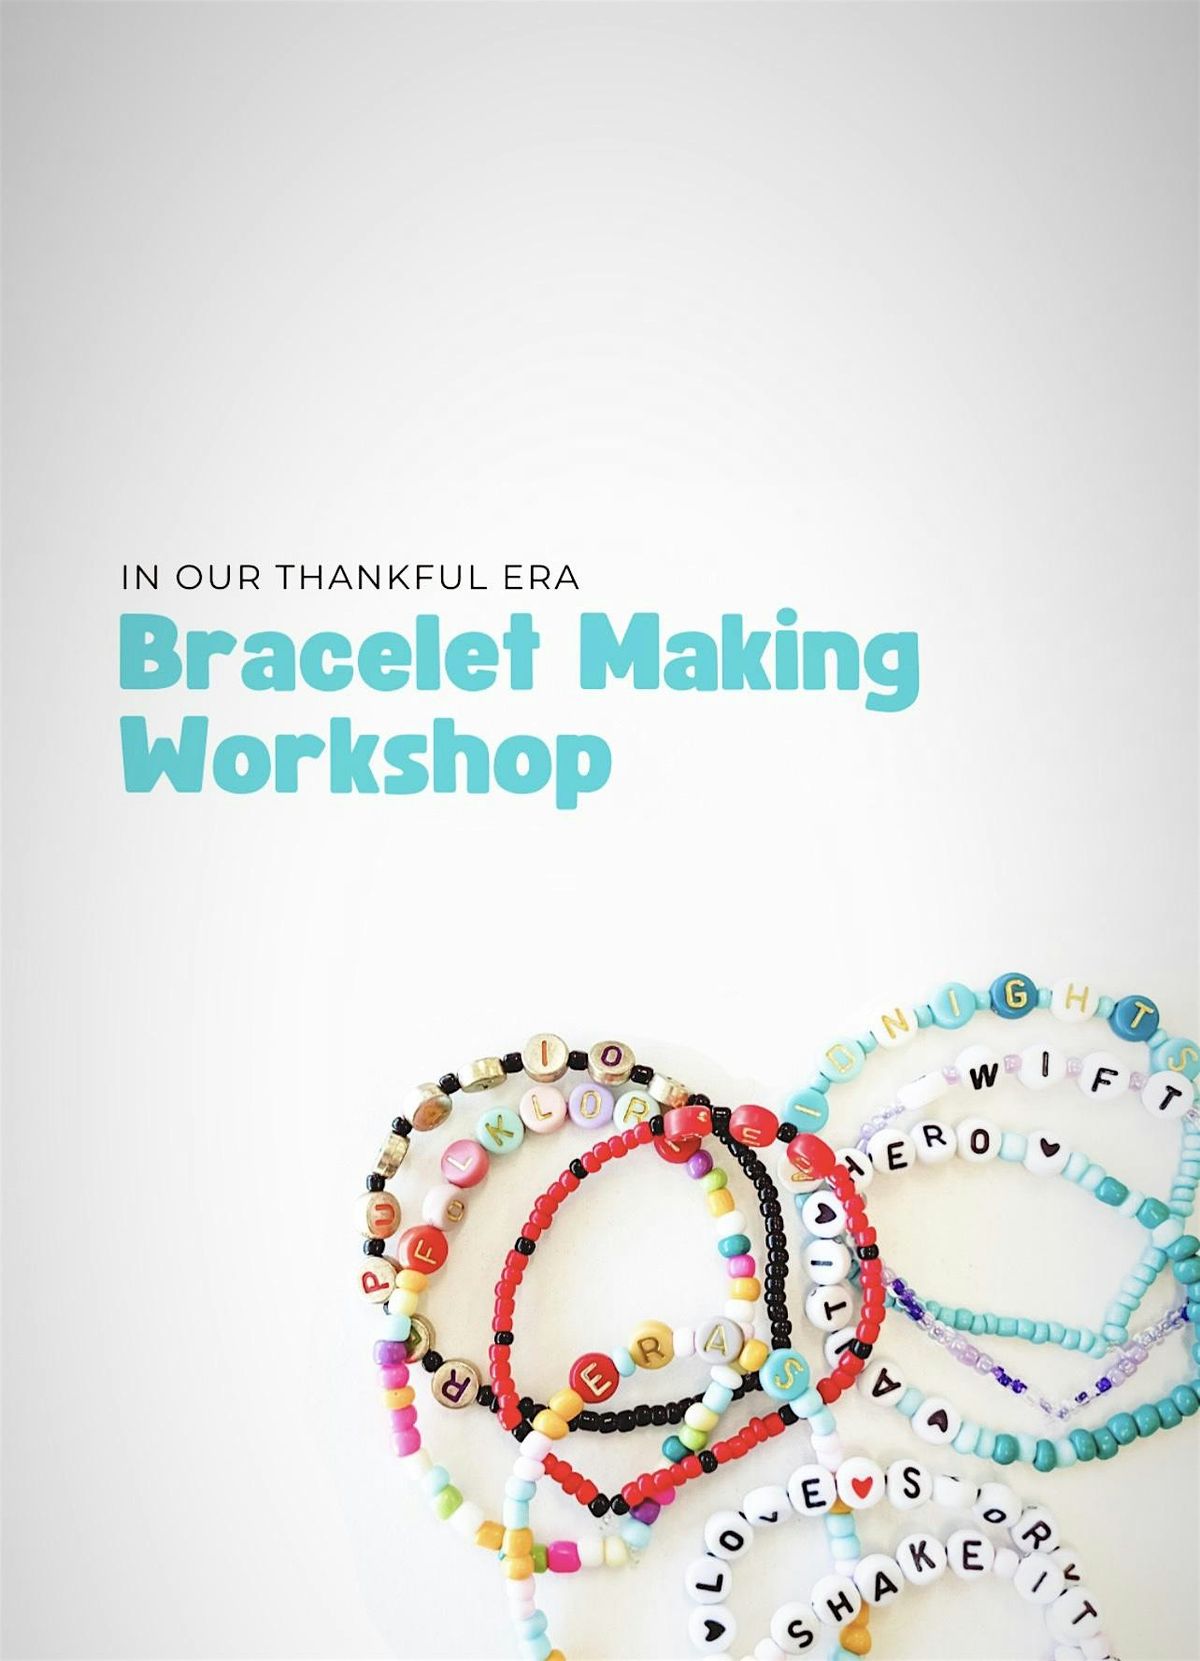 TAY-TAY inspired bracelet-making workshop